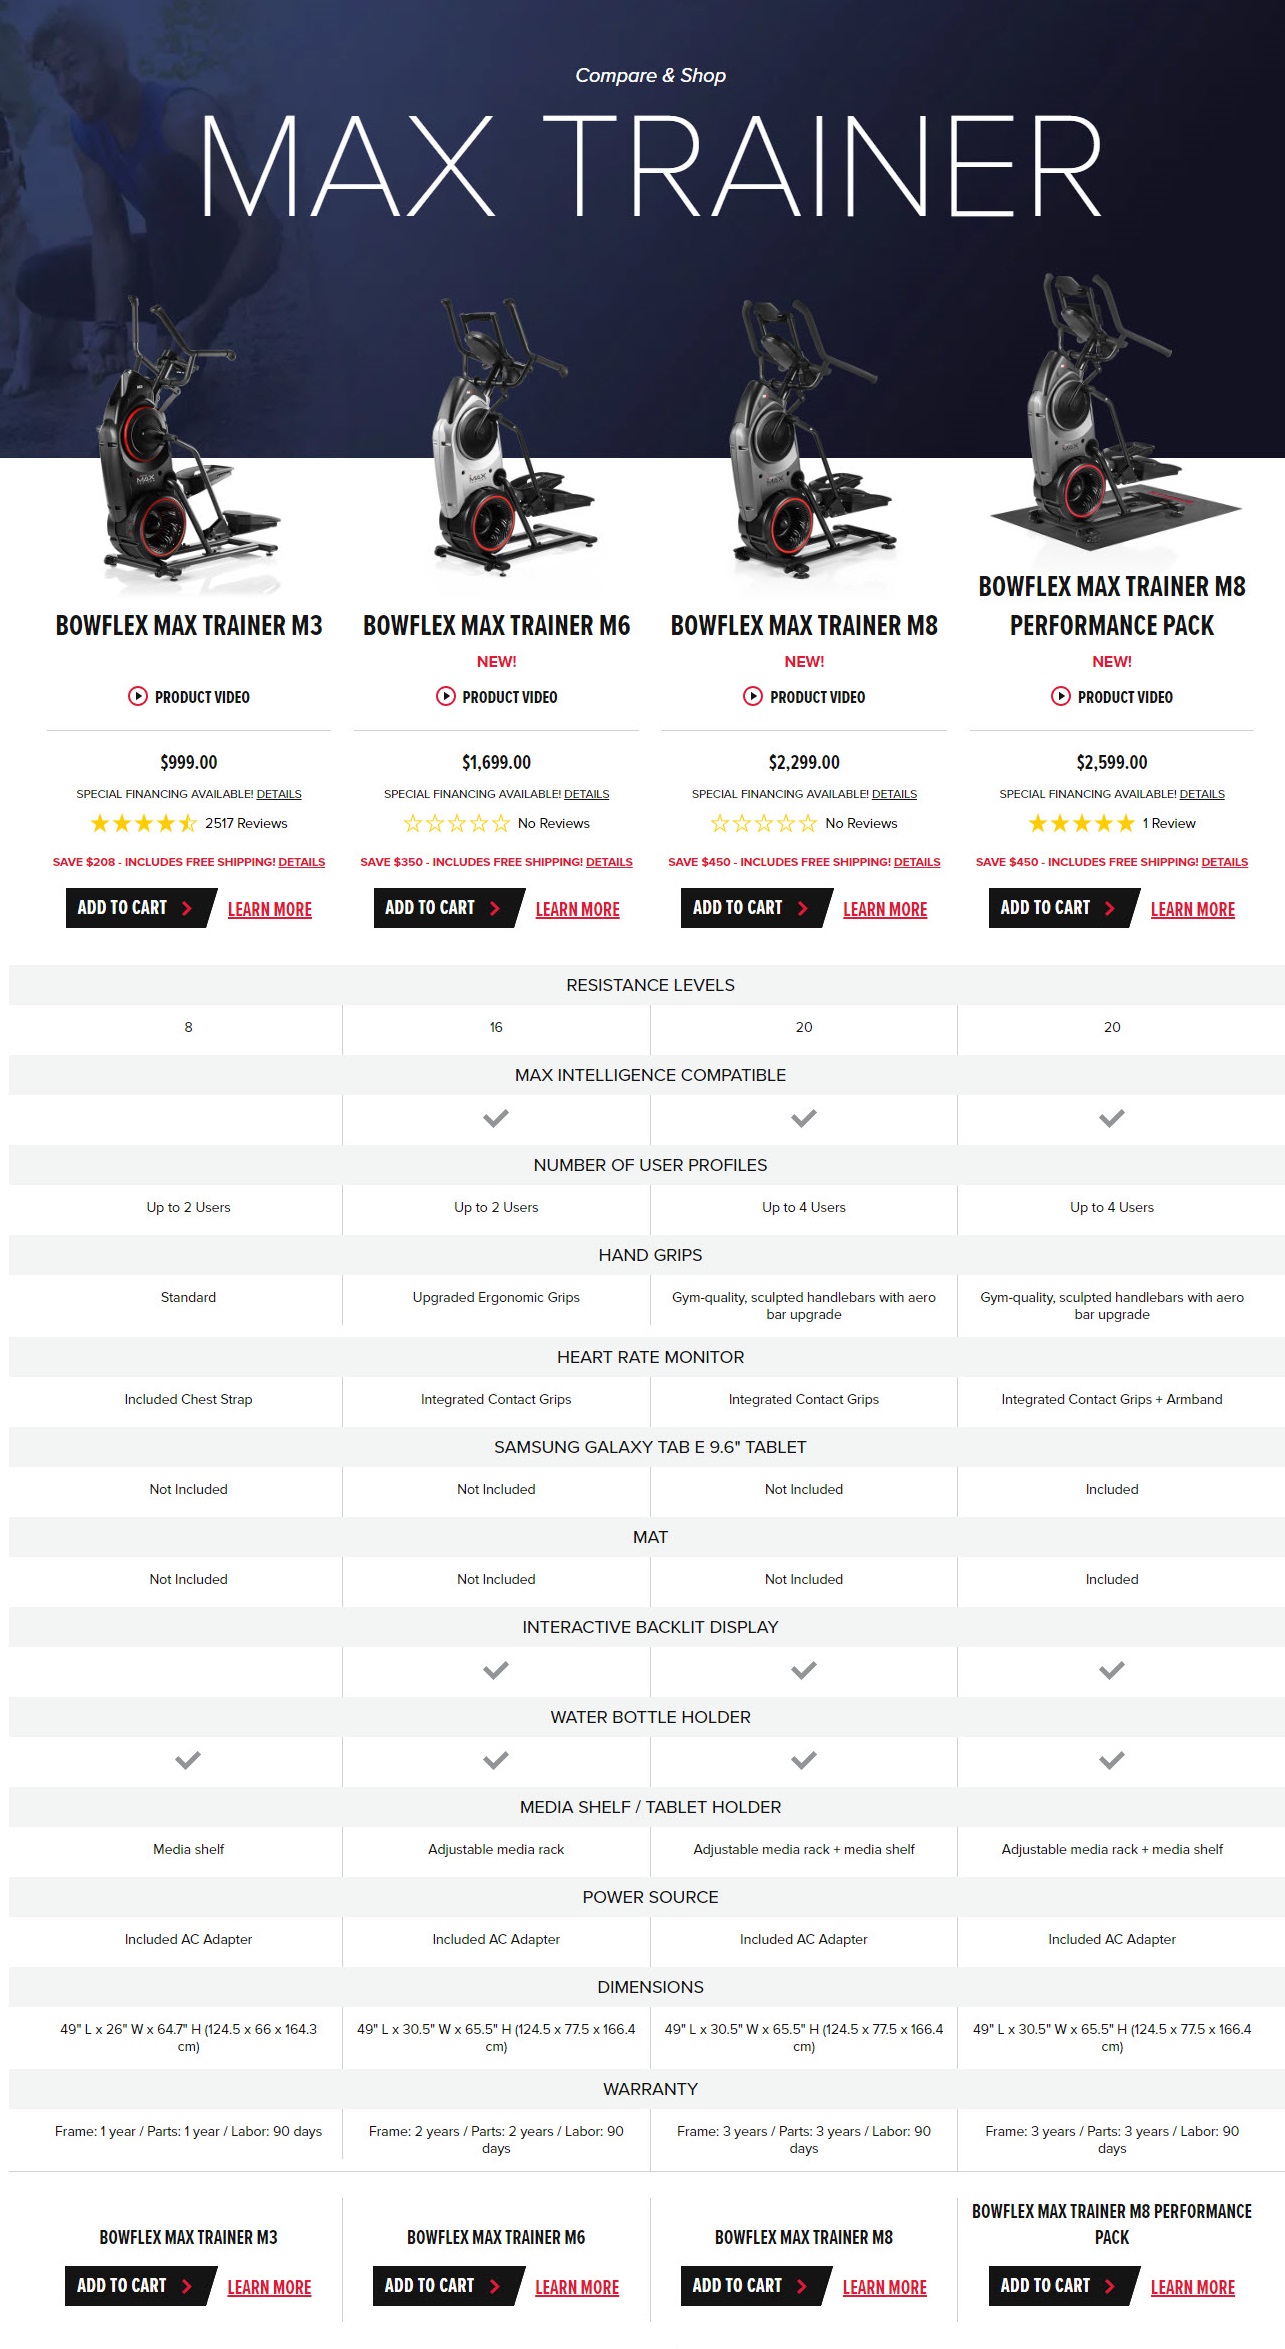 Bowflex Max Trainer comparison chart